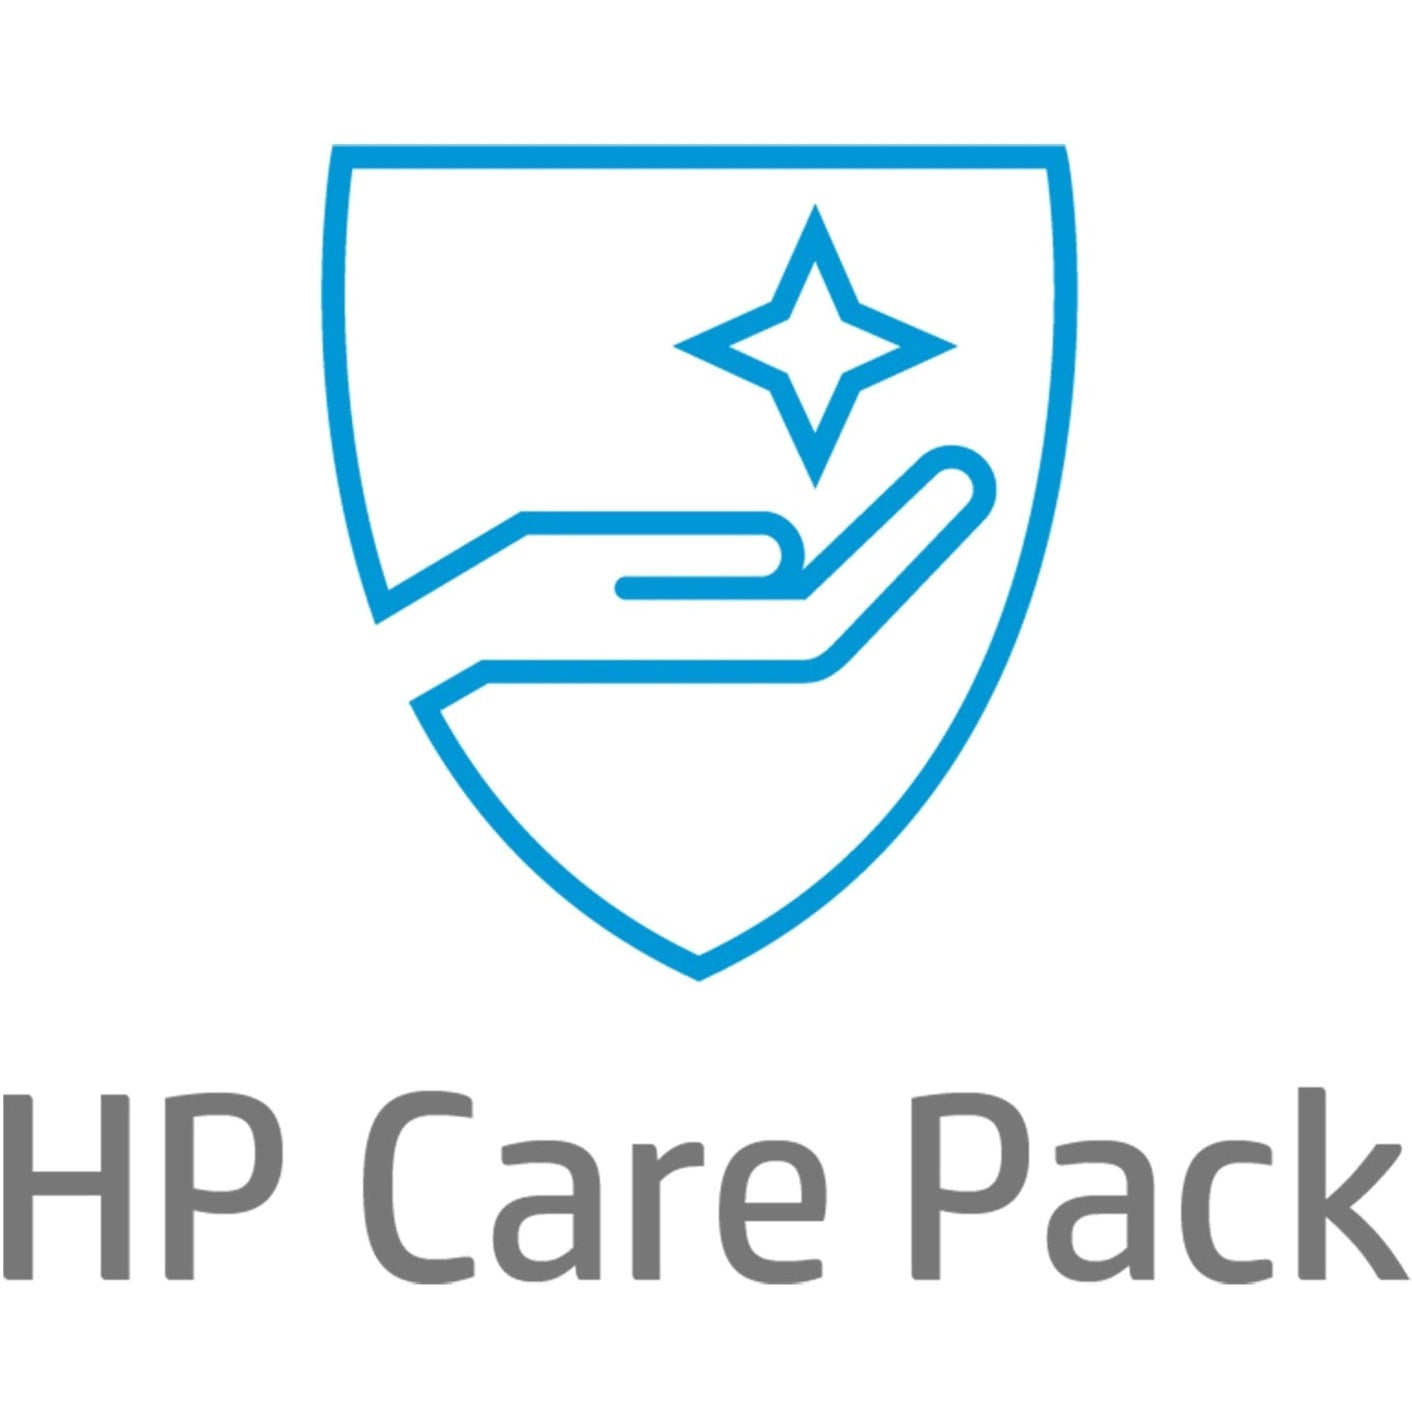 HP Care Pack - 4 Year - Service (UK720E)